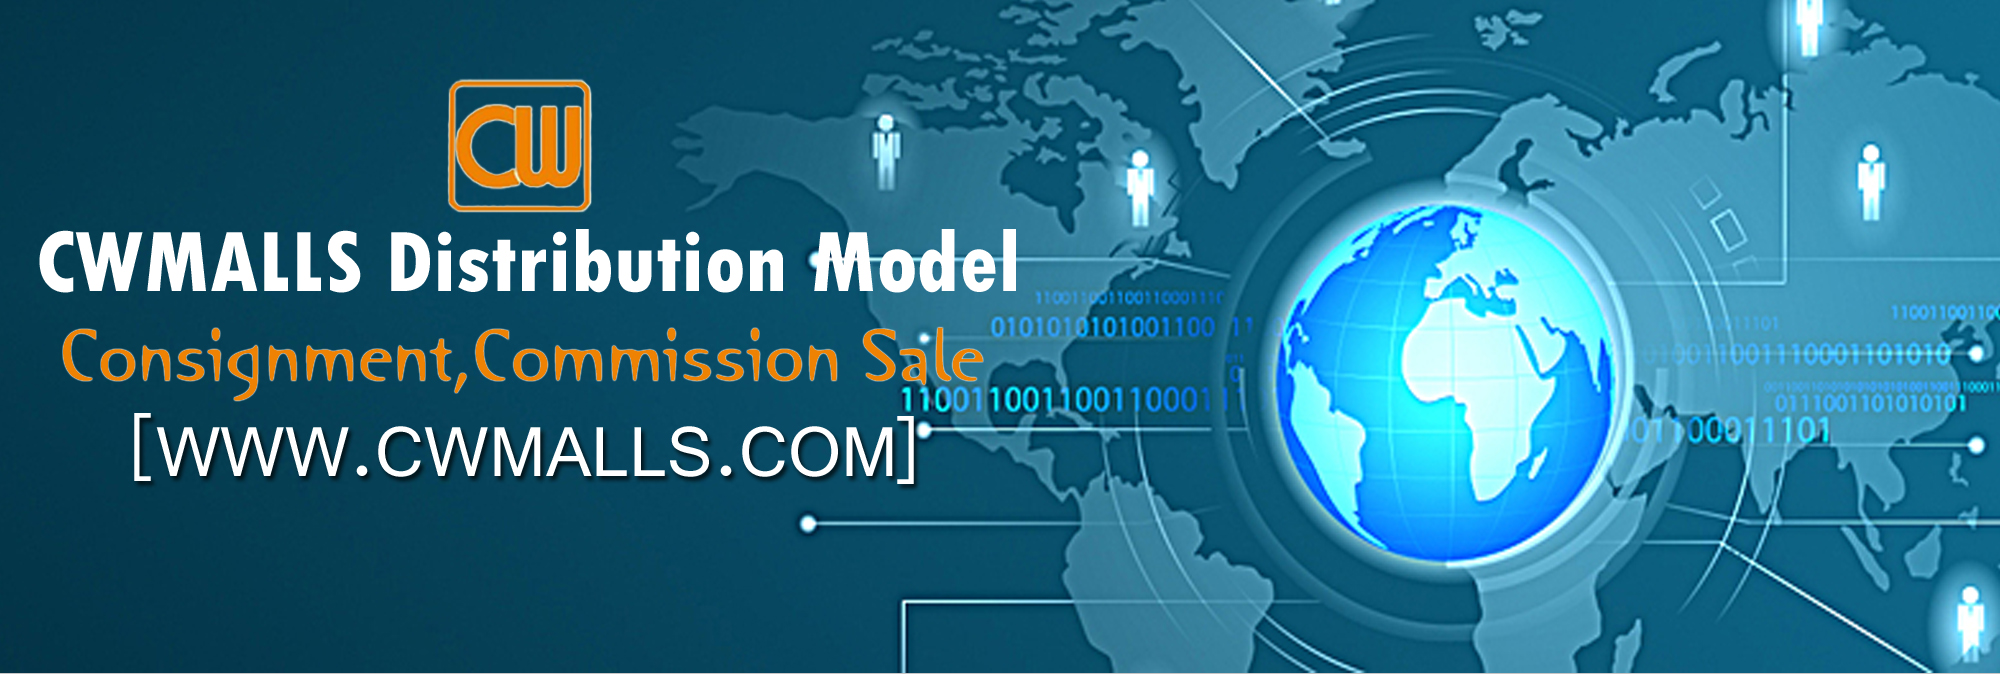 CWMALLS Distribution Model.jpg